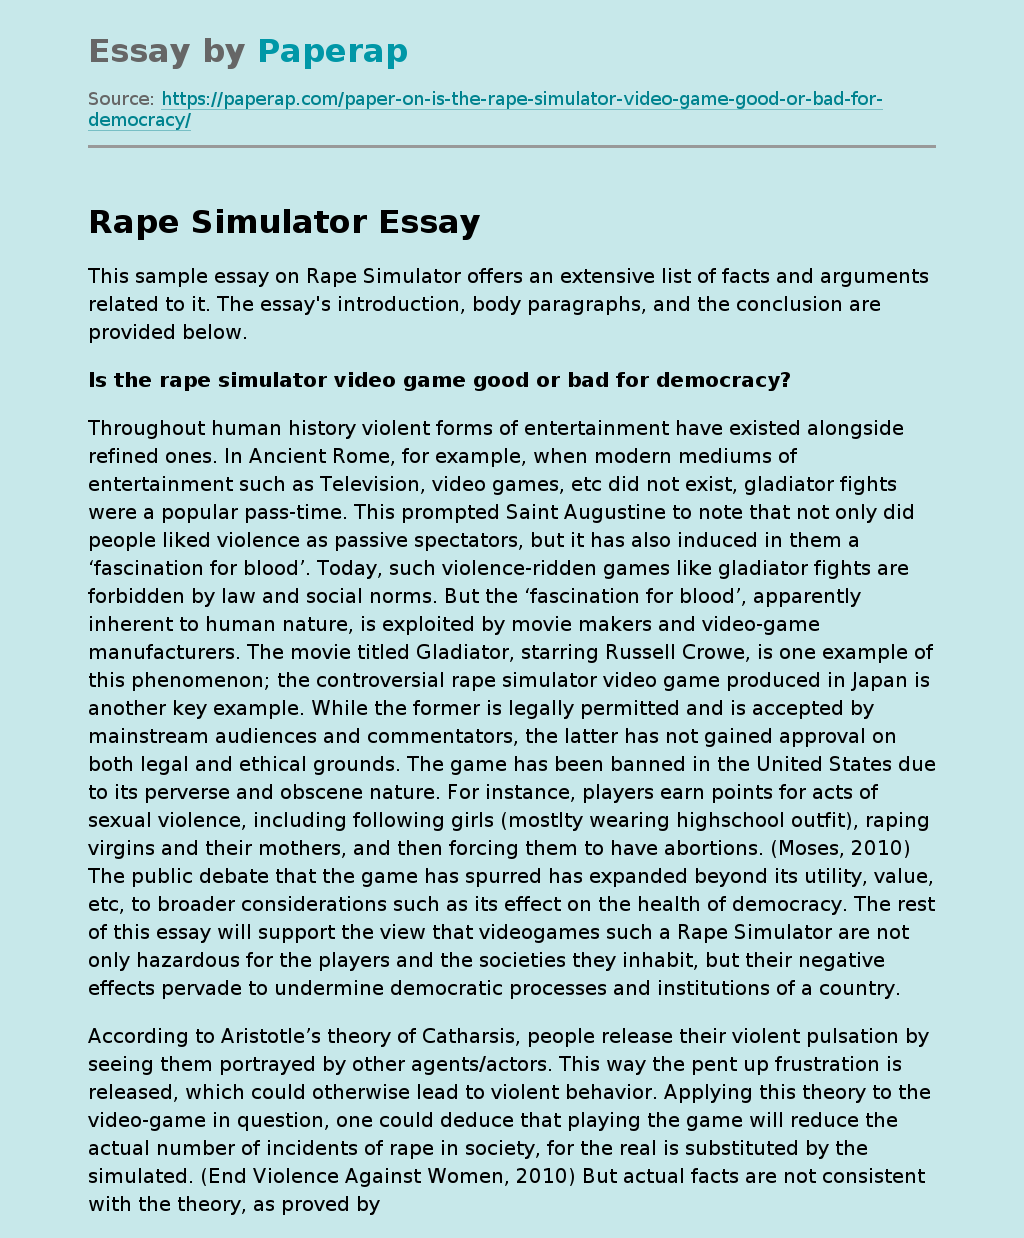 Rape Simulator: Examining the Issues